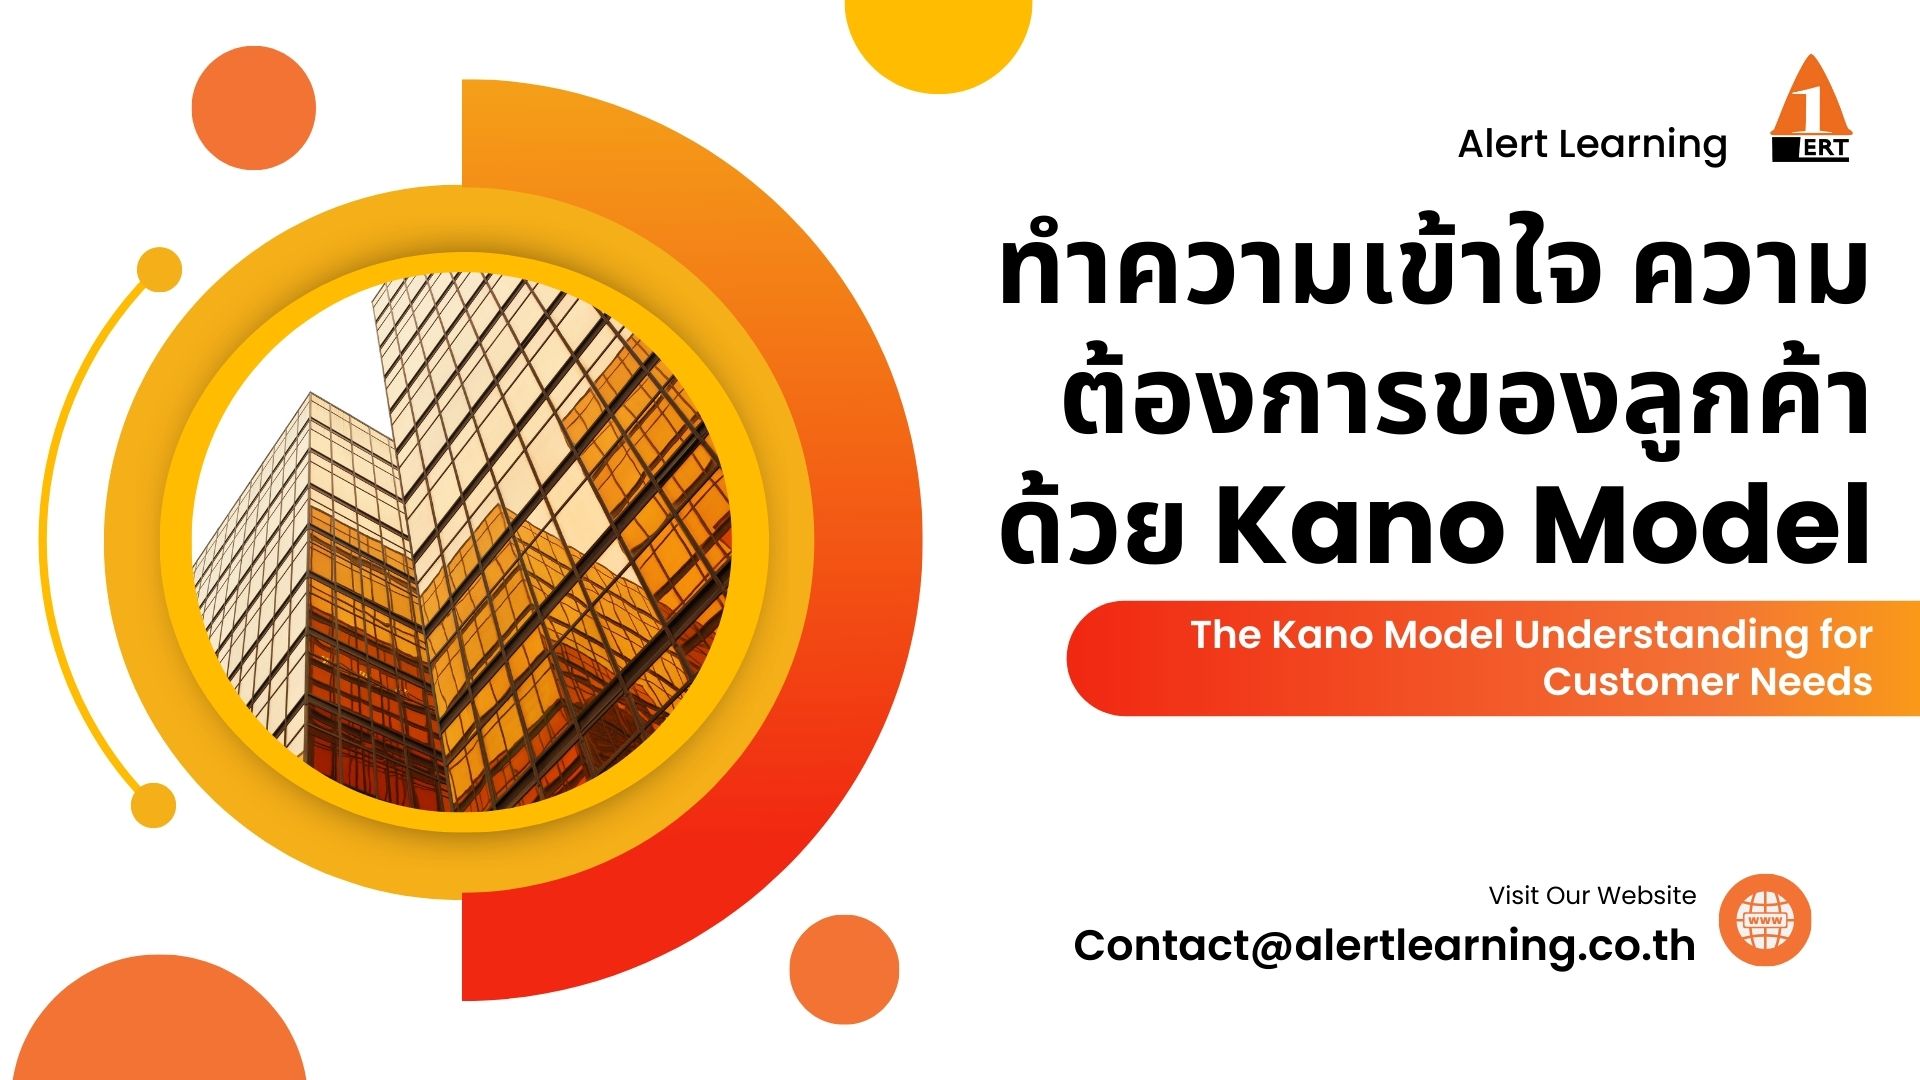 The Kano Model Understanding for Customer Needs